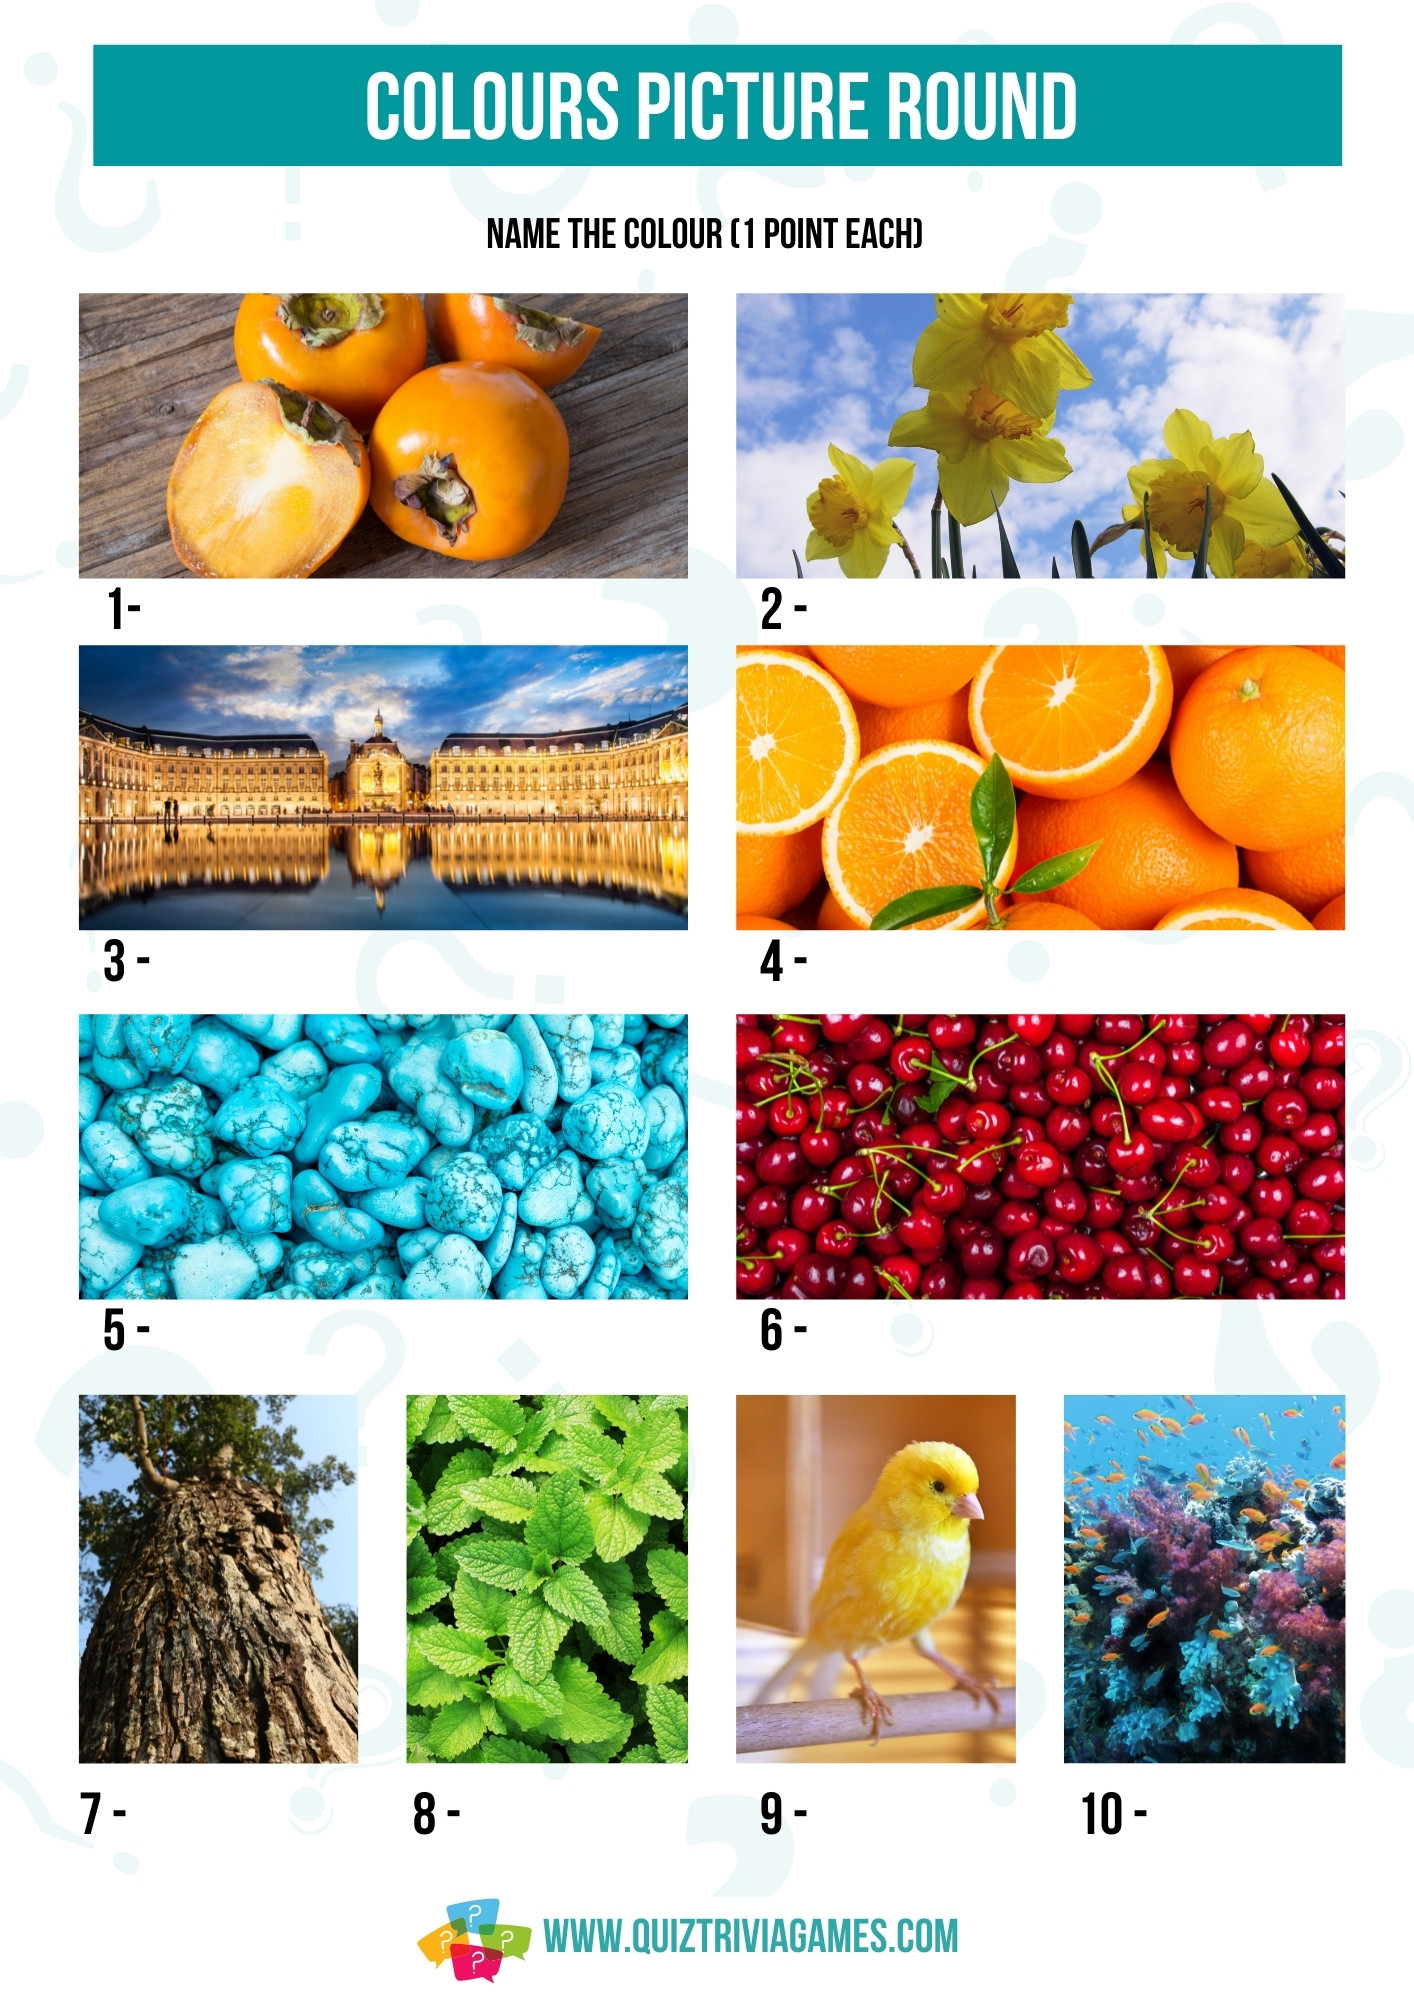 55 Colour Quiz Questions Answers inc Picture Round Quiz Trivia Games